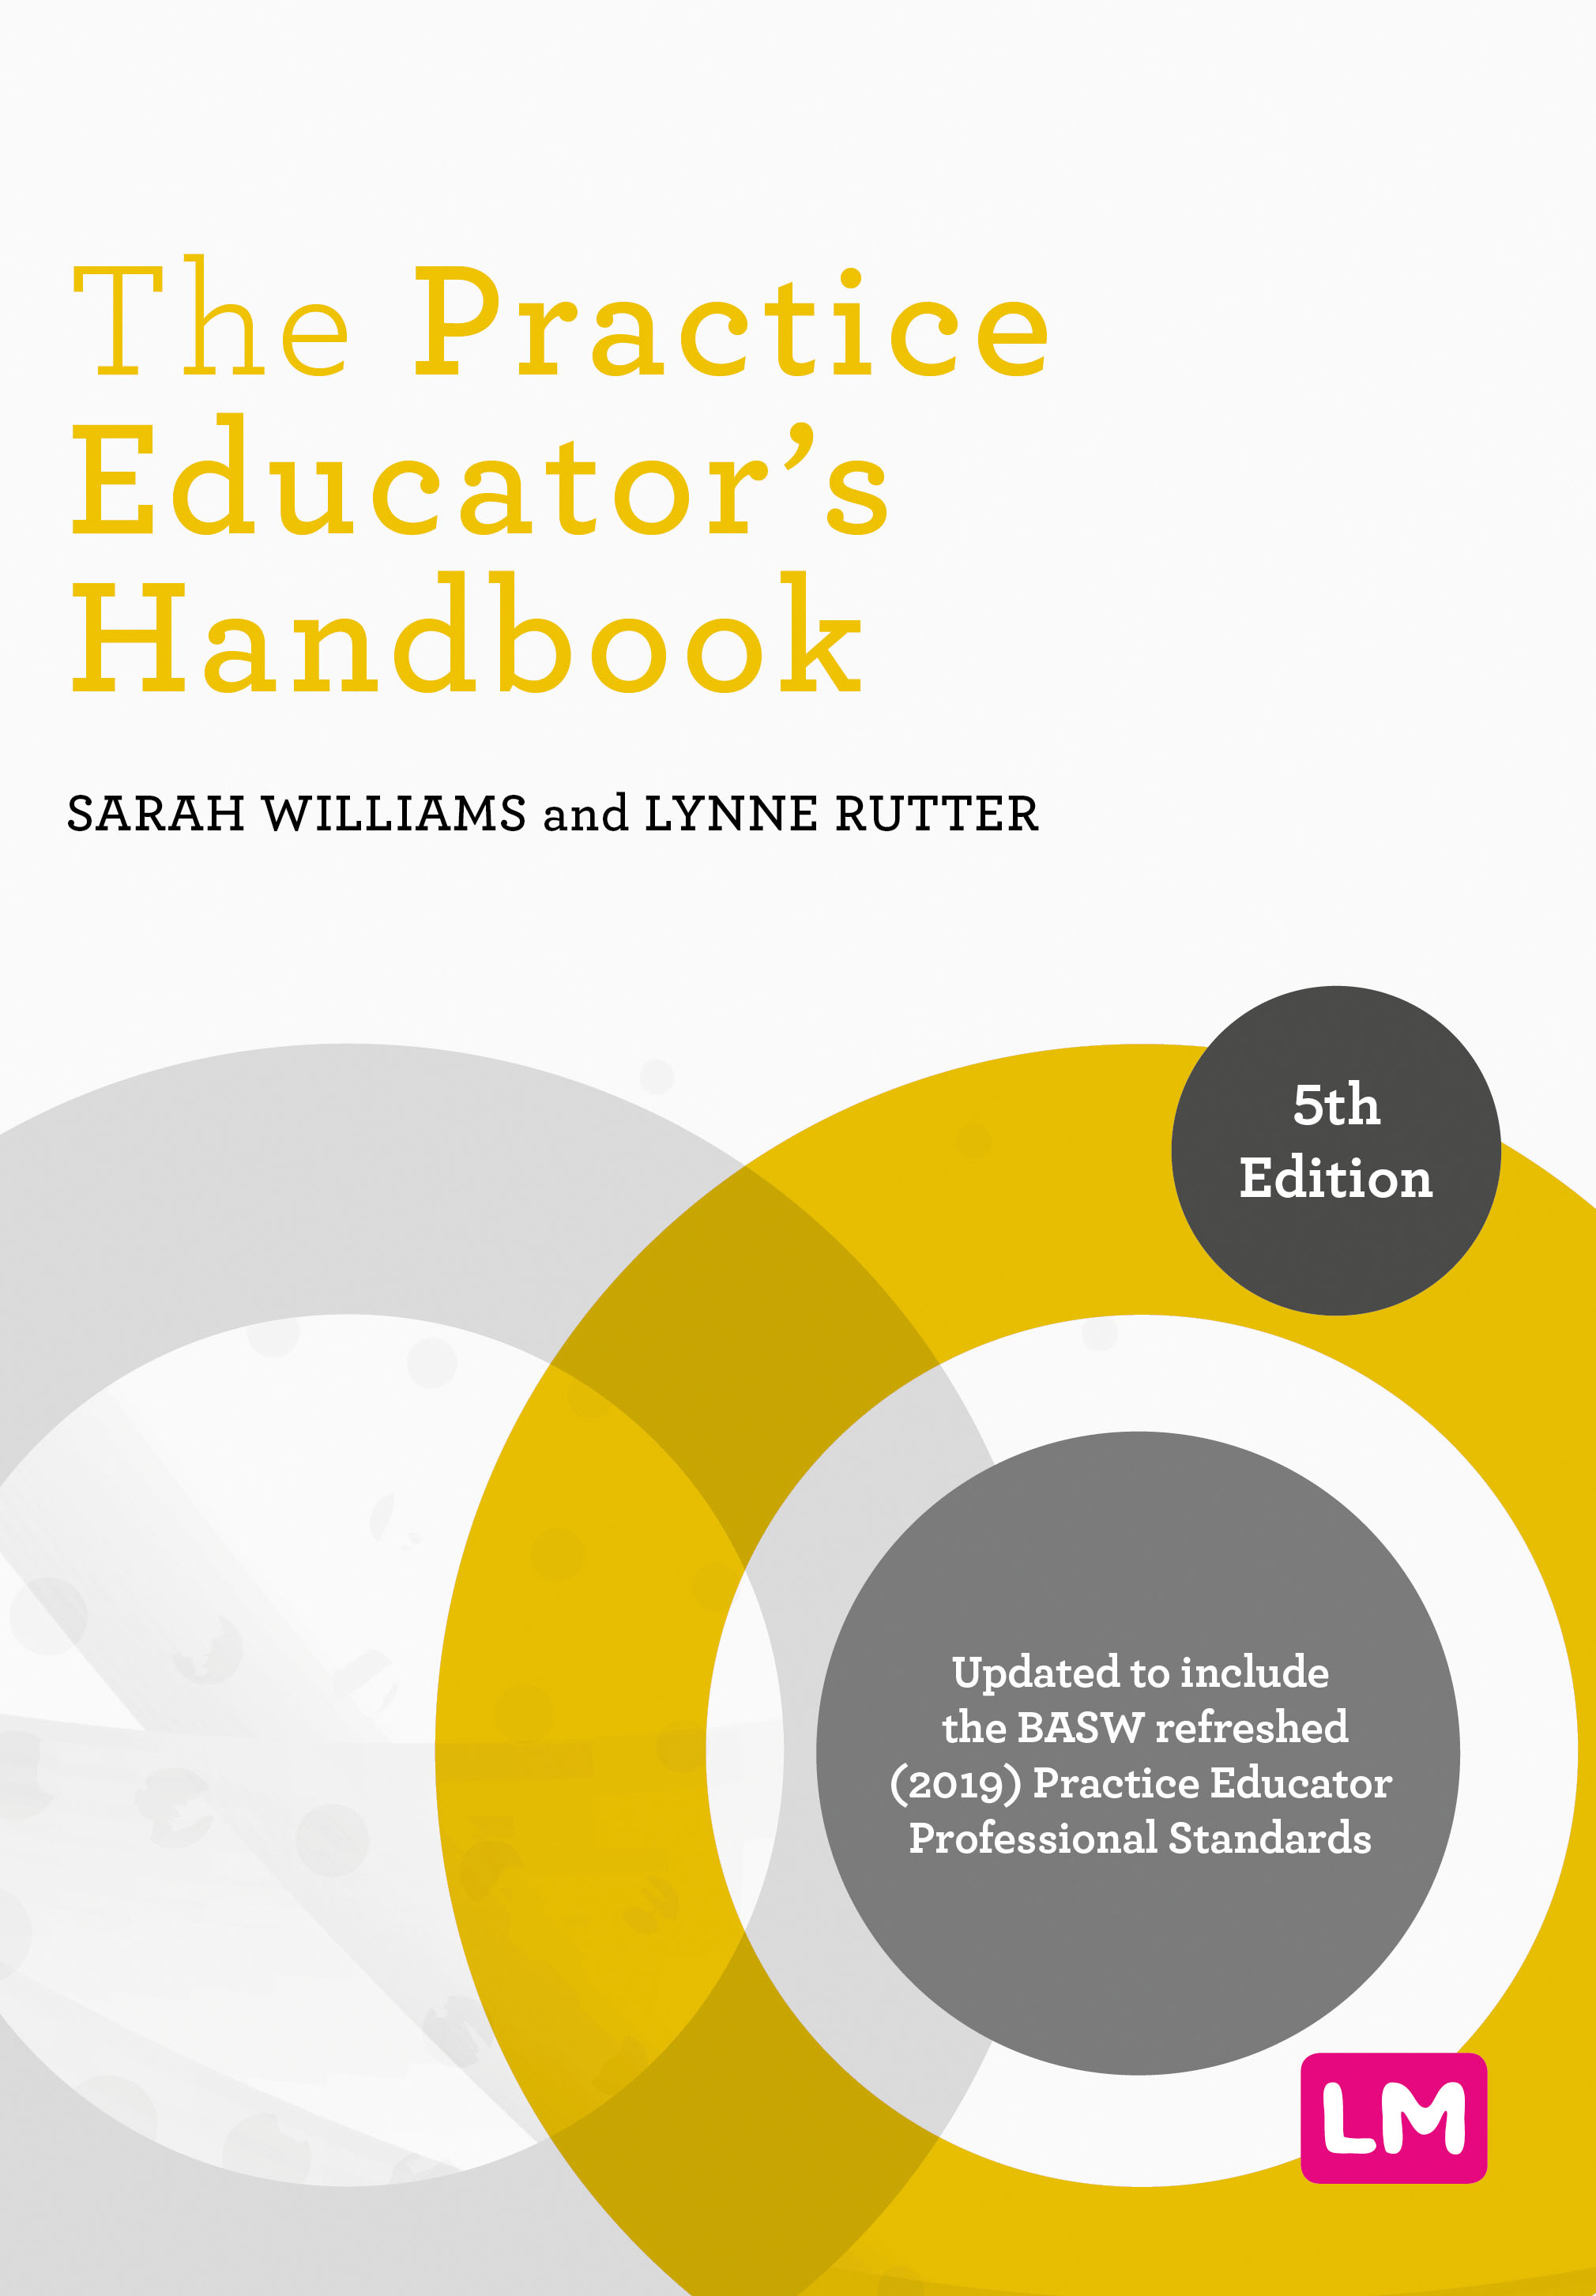 The Practice Educator's Handbook cover image